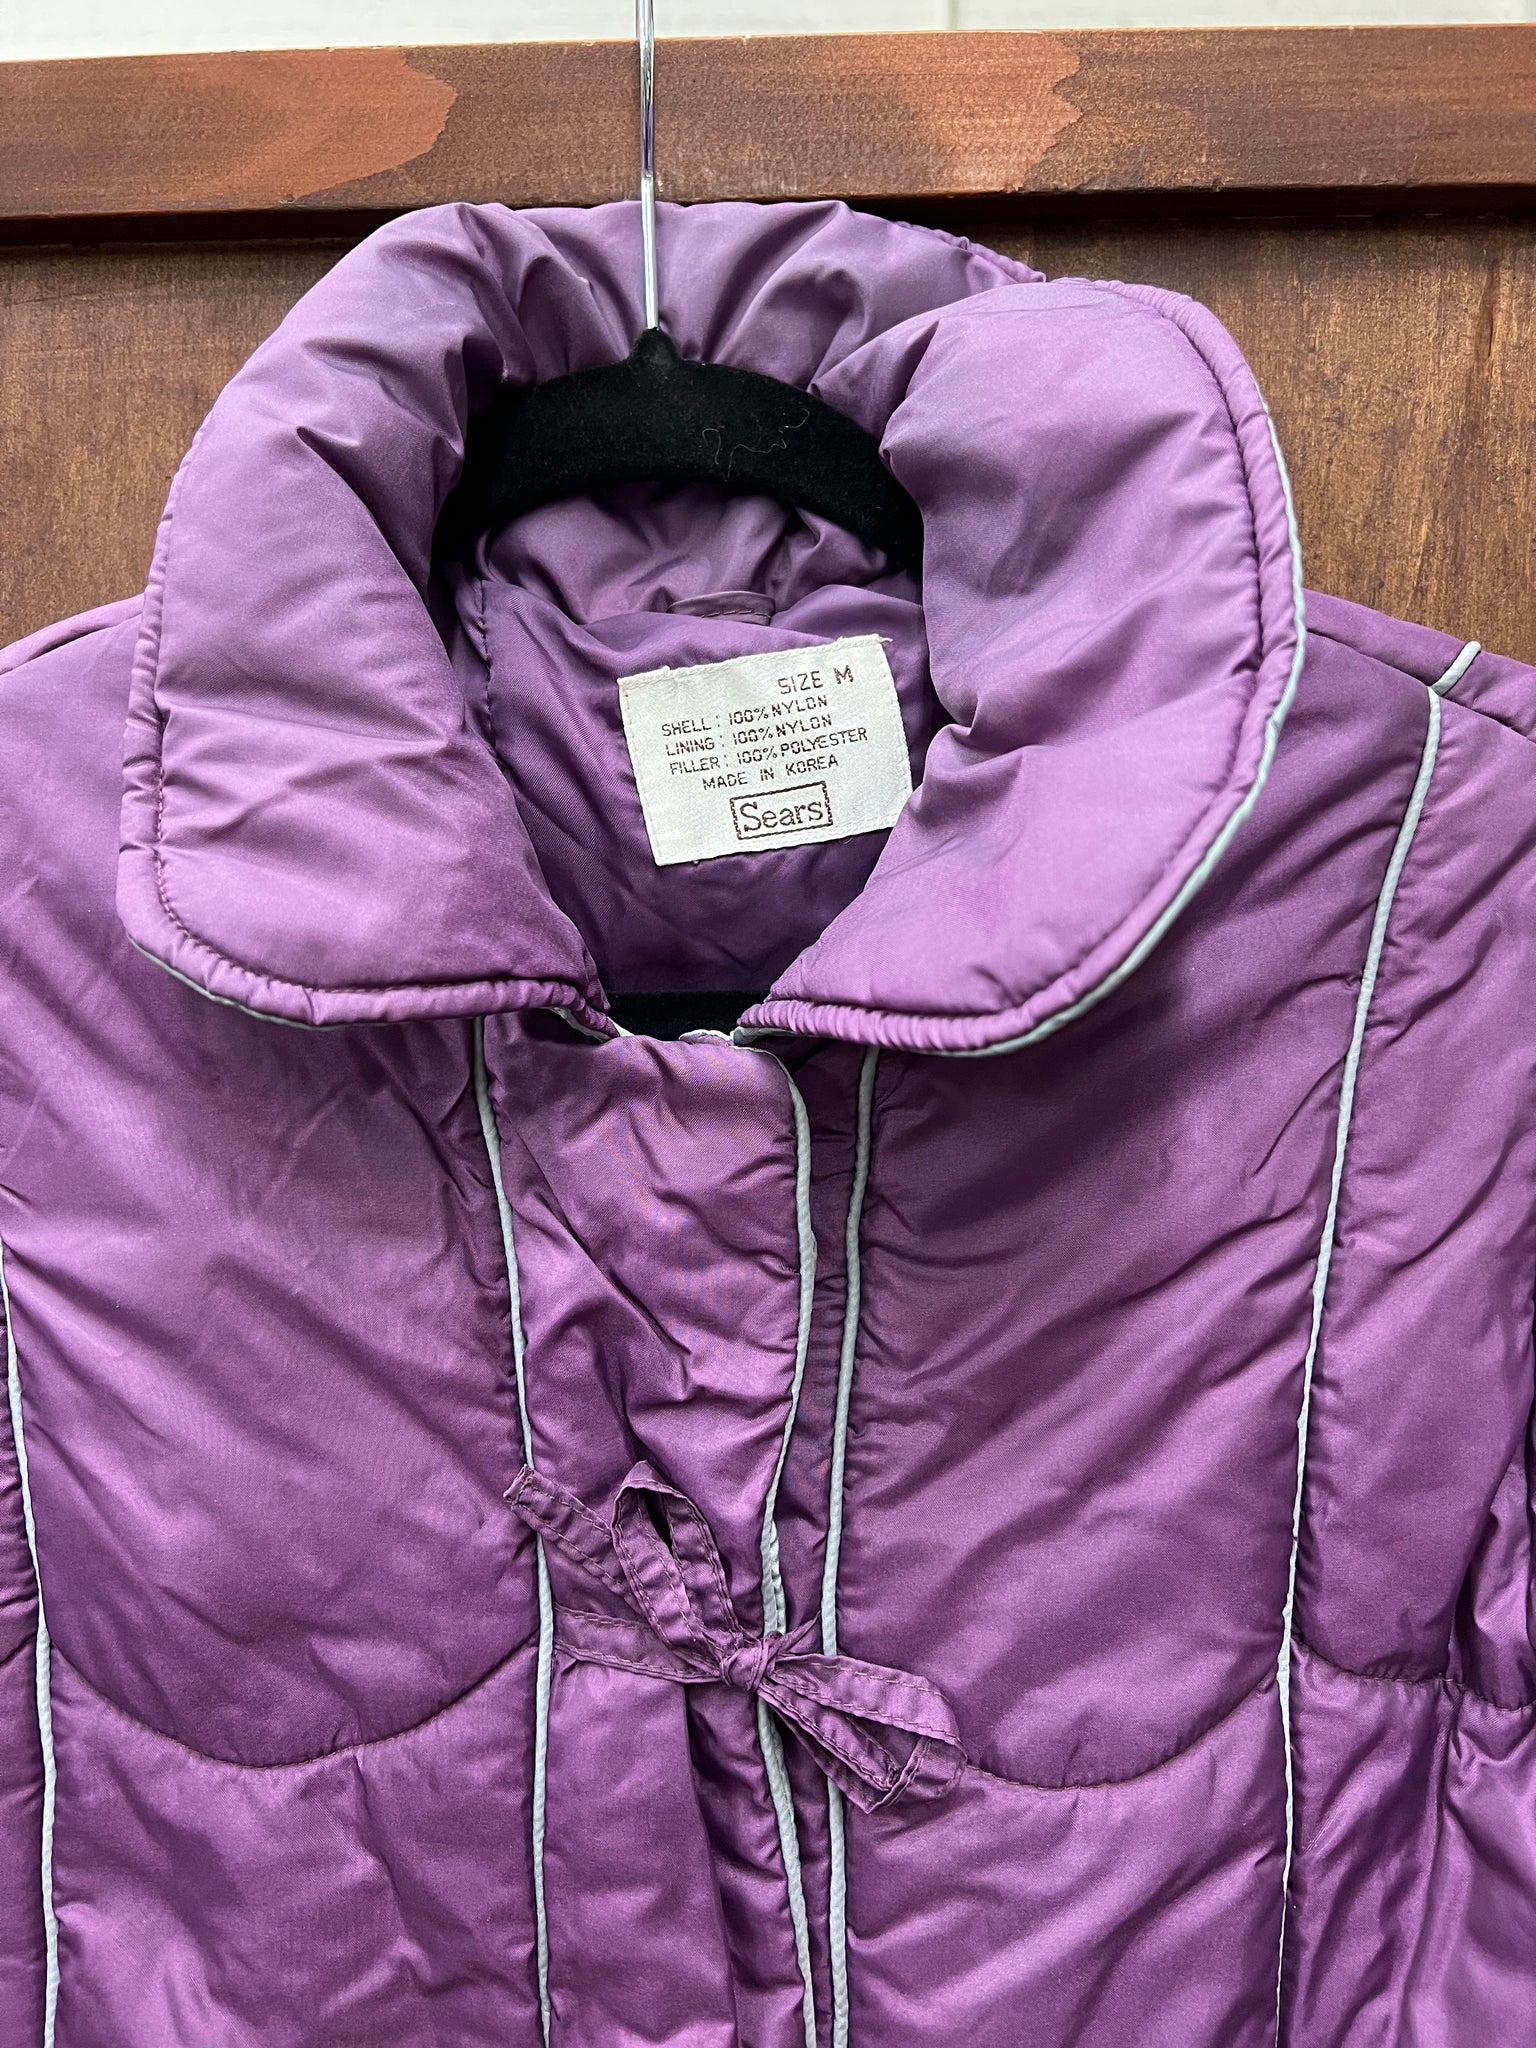 1980s JACKET- COAT- Sears purple winter puffy coat